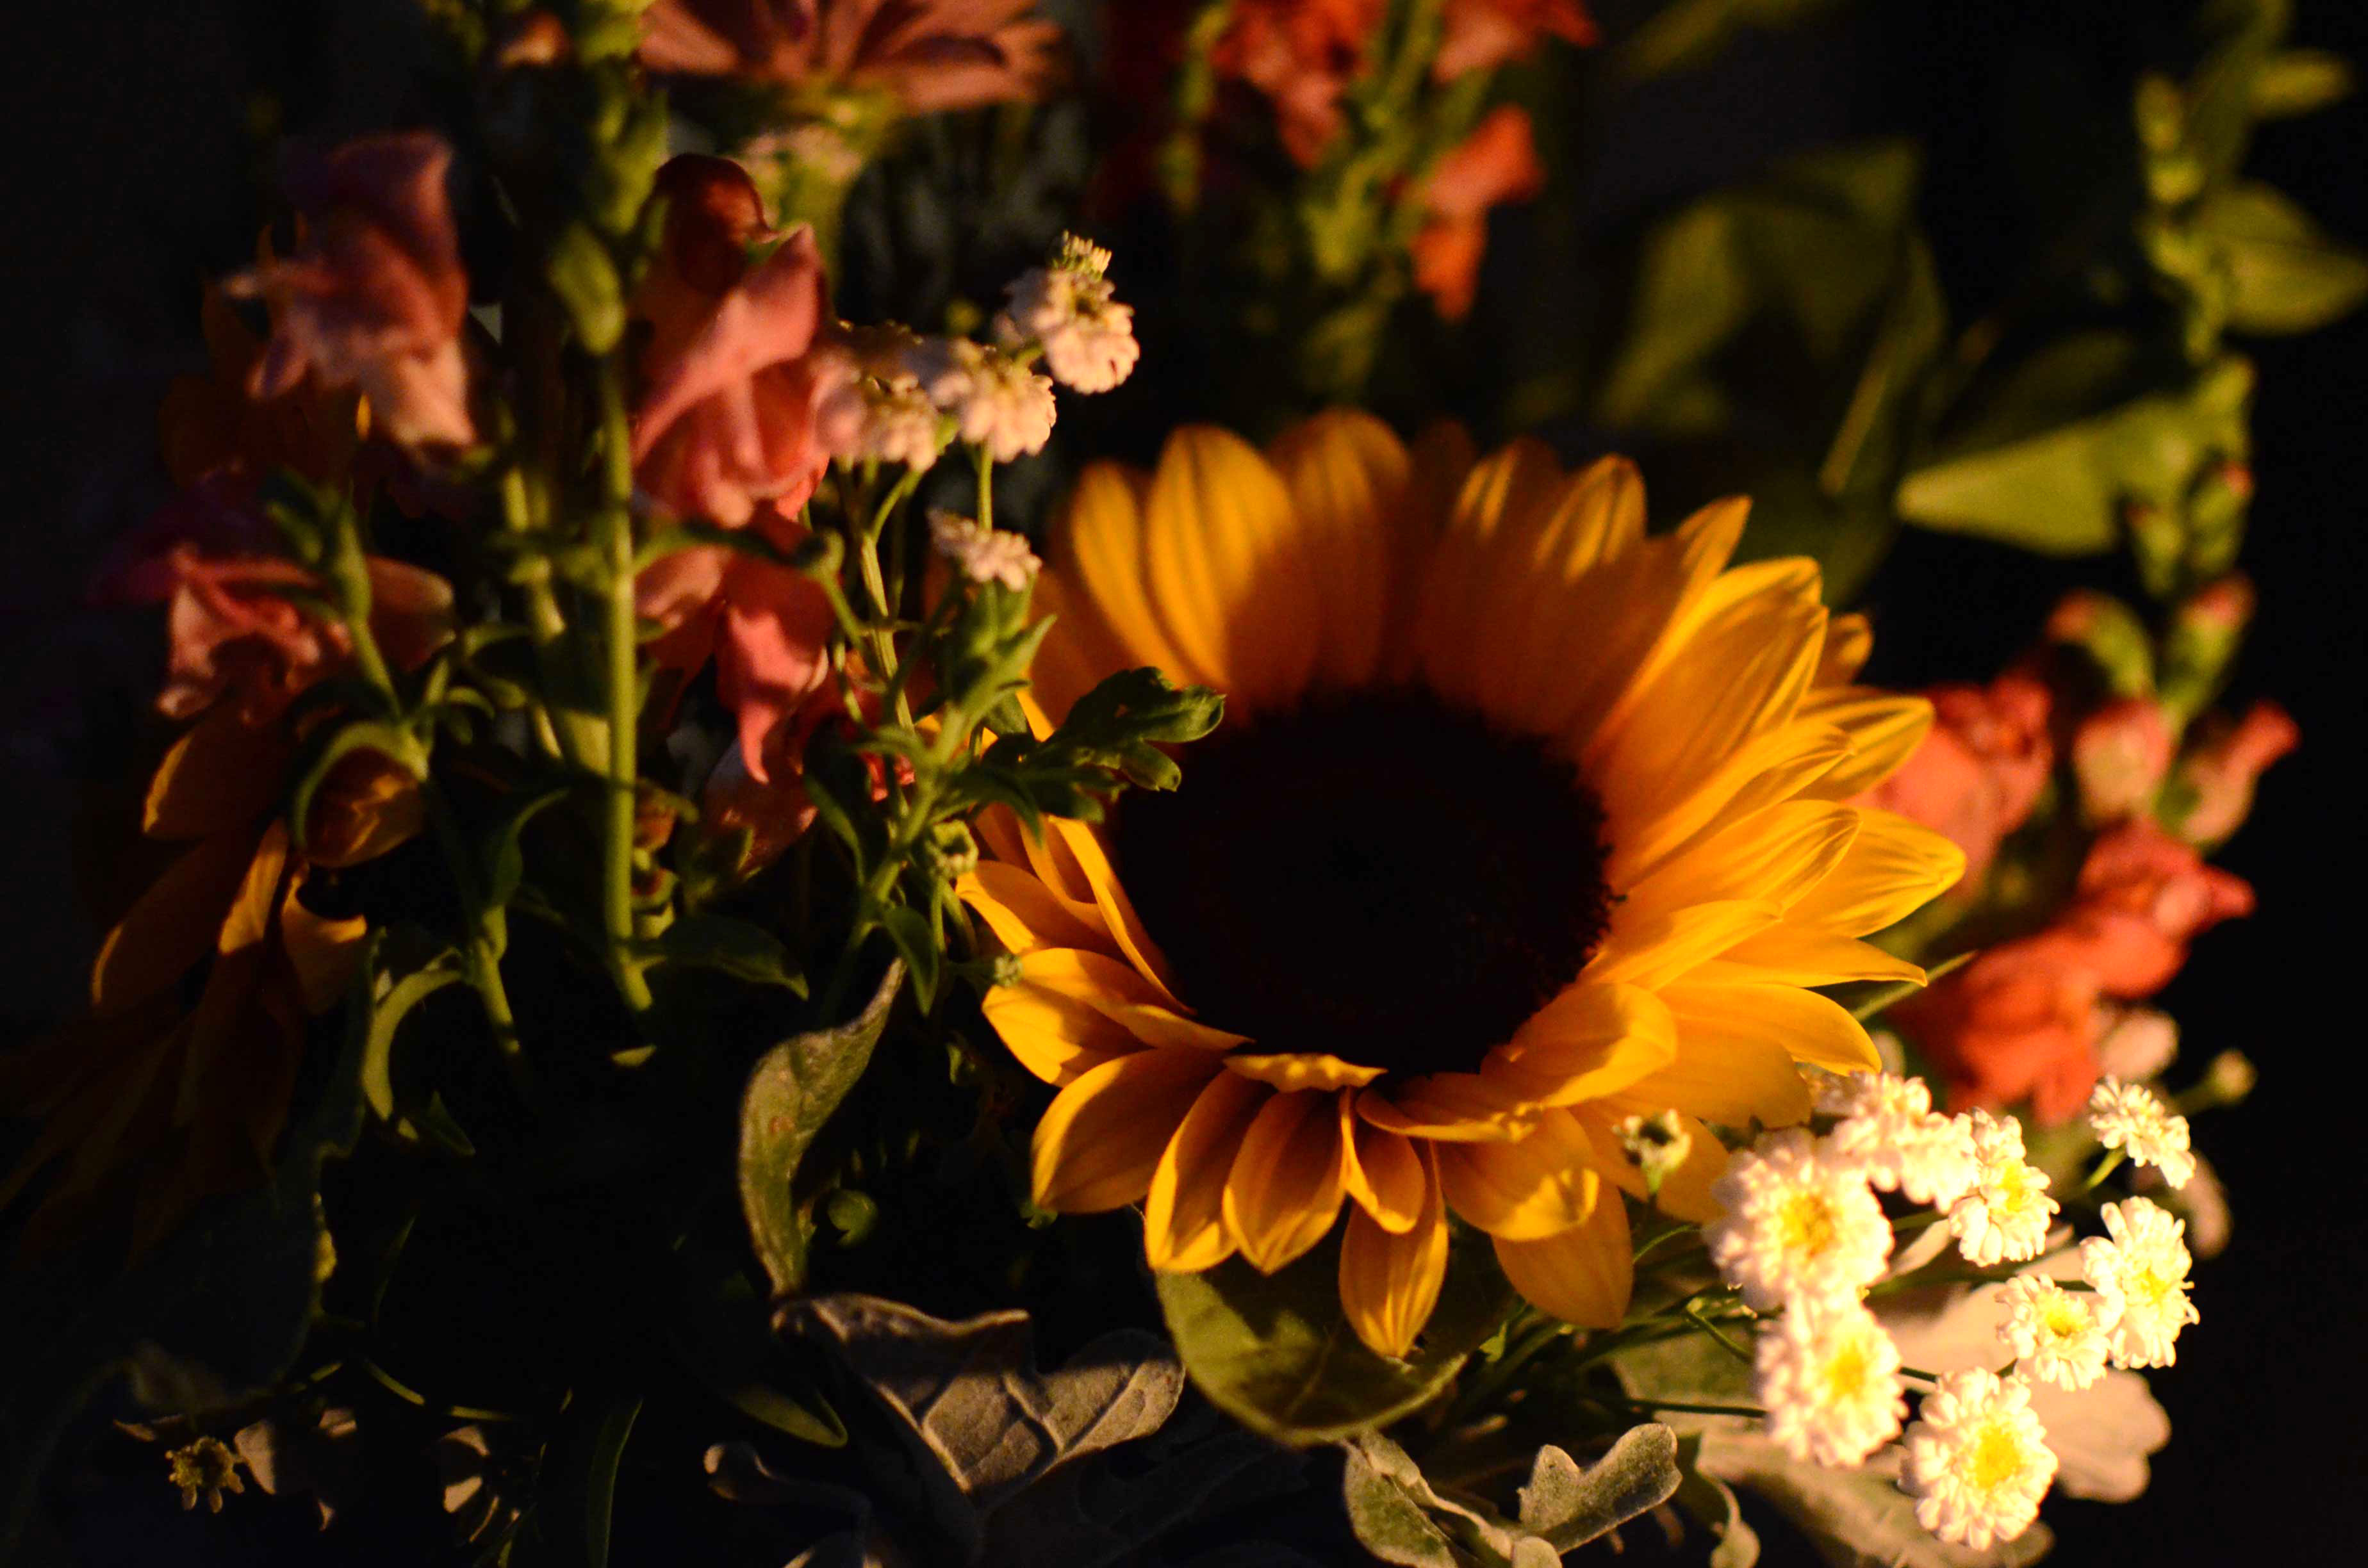 Image of chiaroscuro-like lit flowers